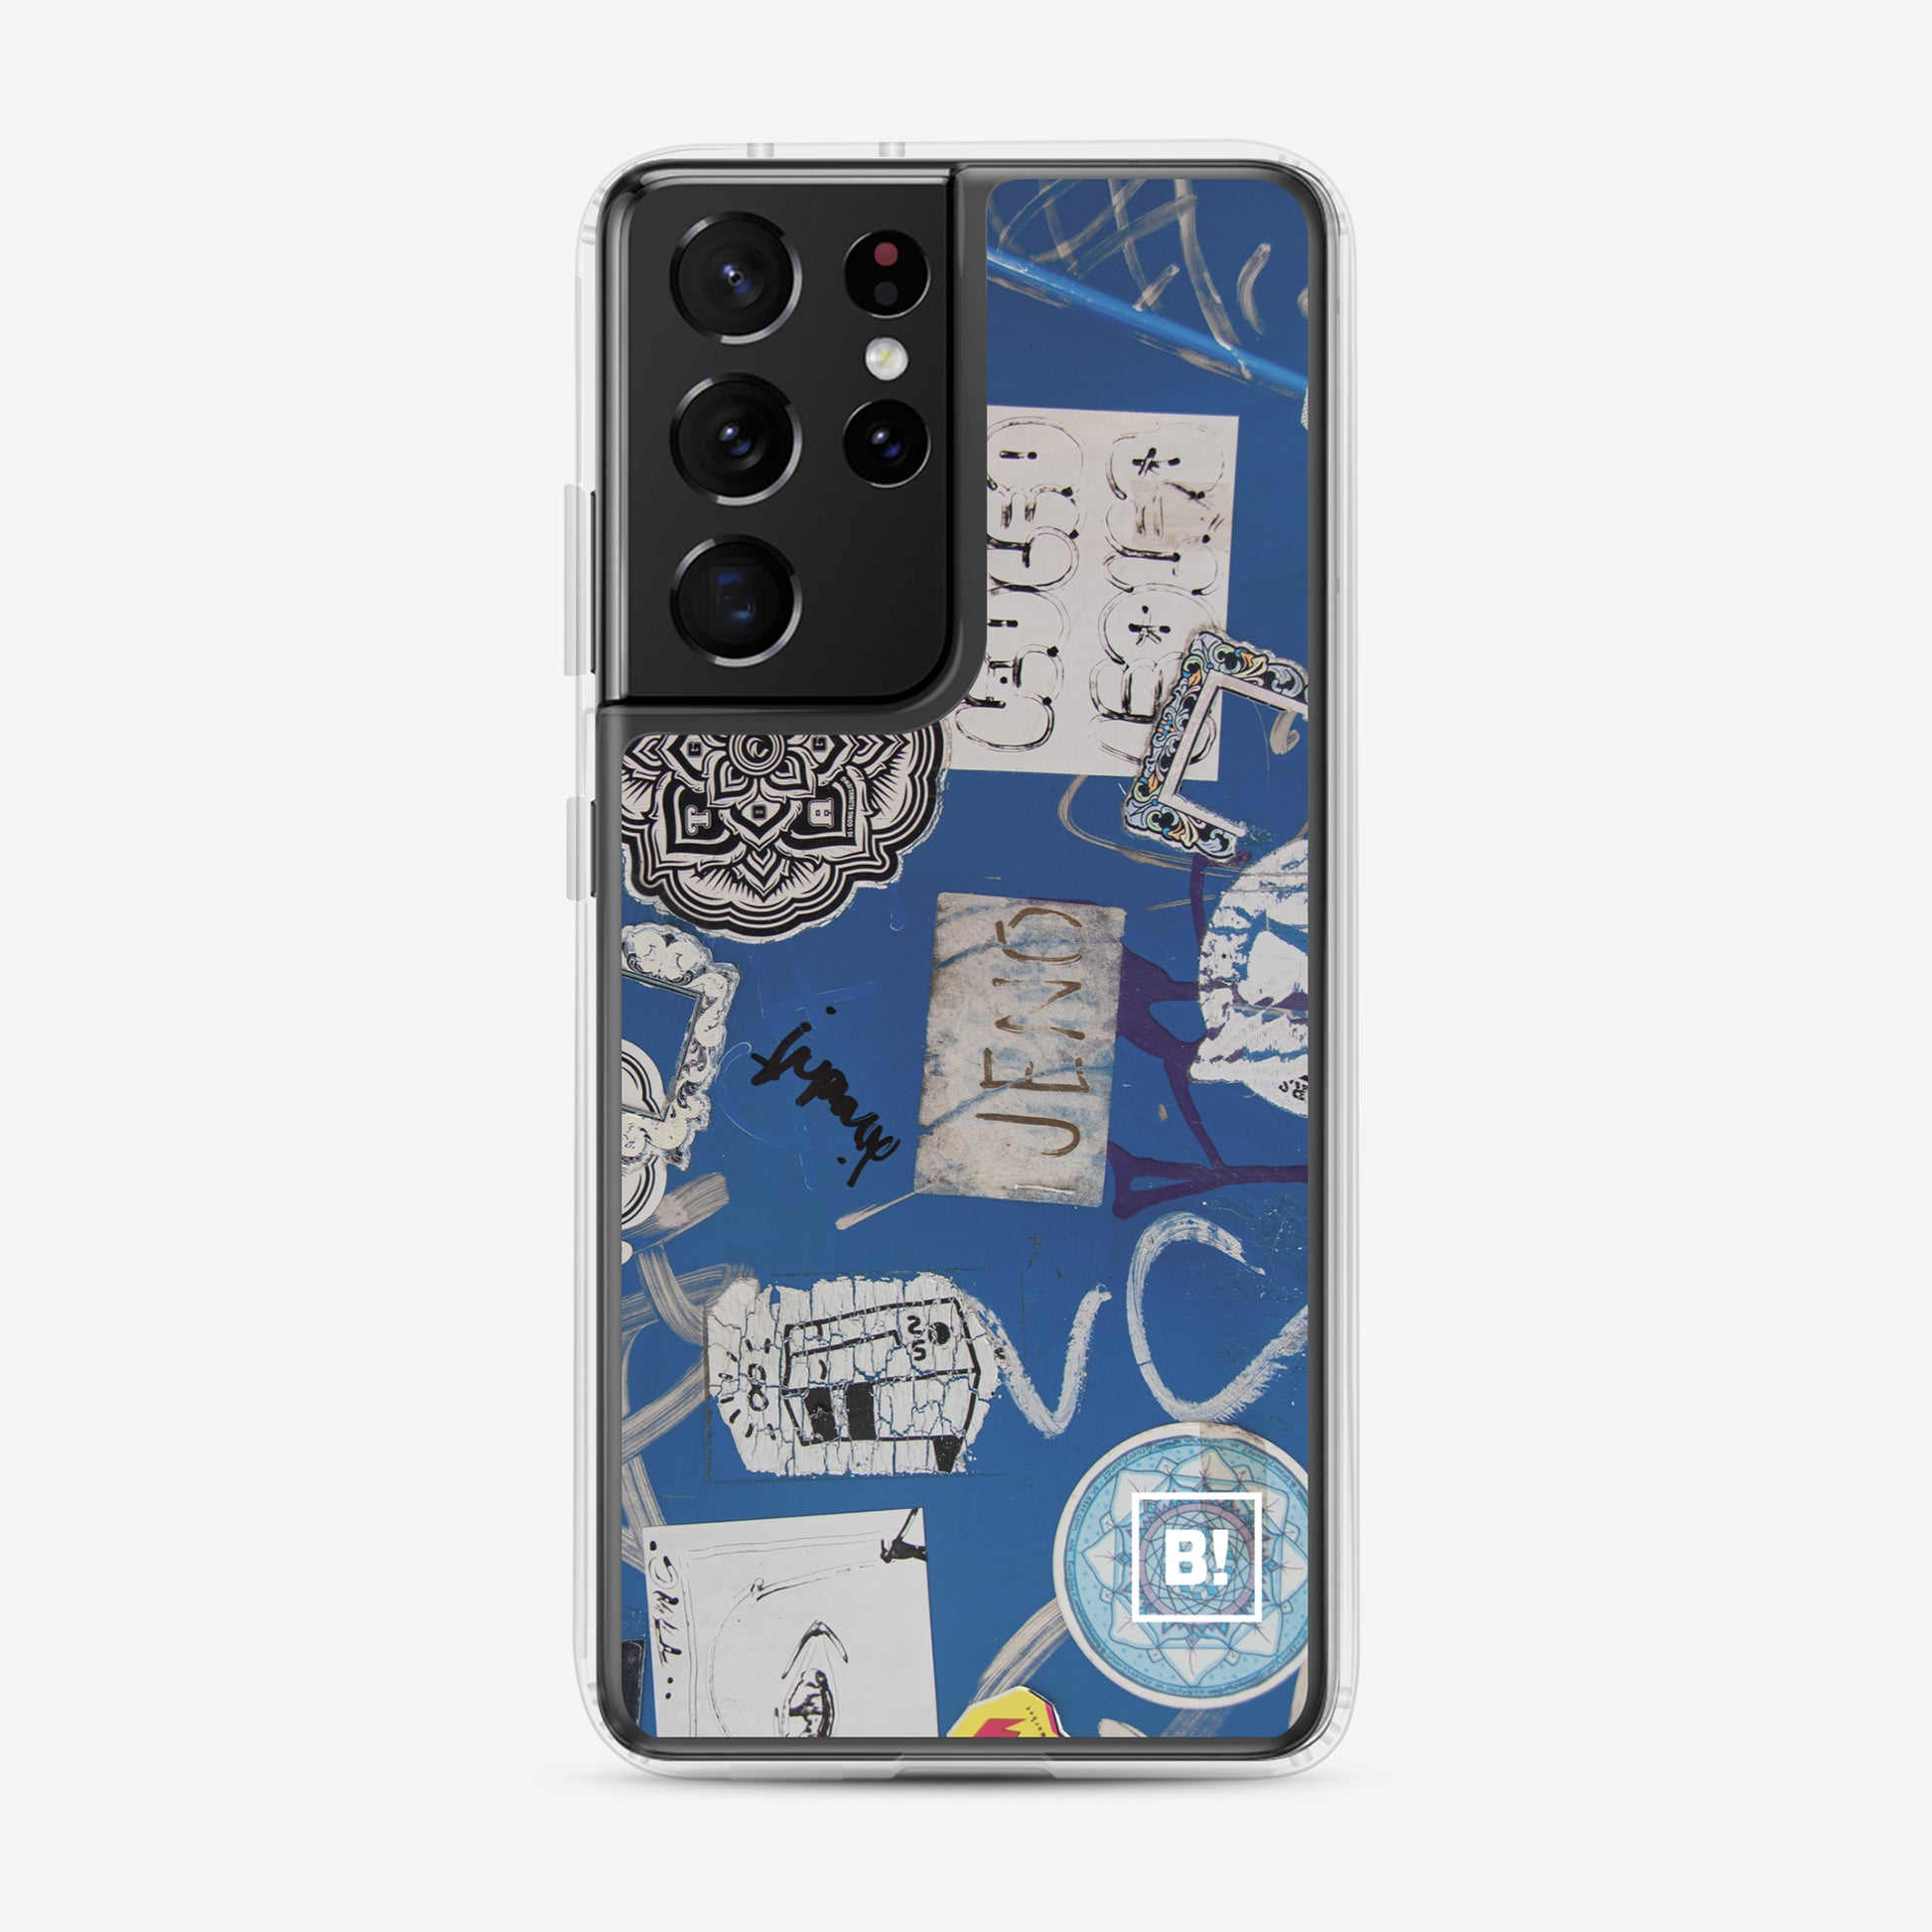 Binspired Leo Leo No2 Urban Art Samsung Galaxy s21 Ultra Case